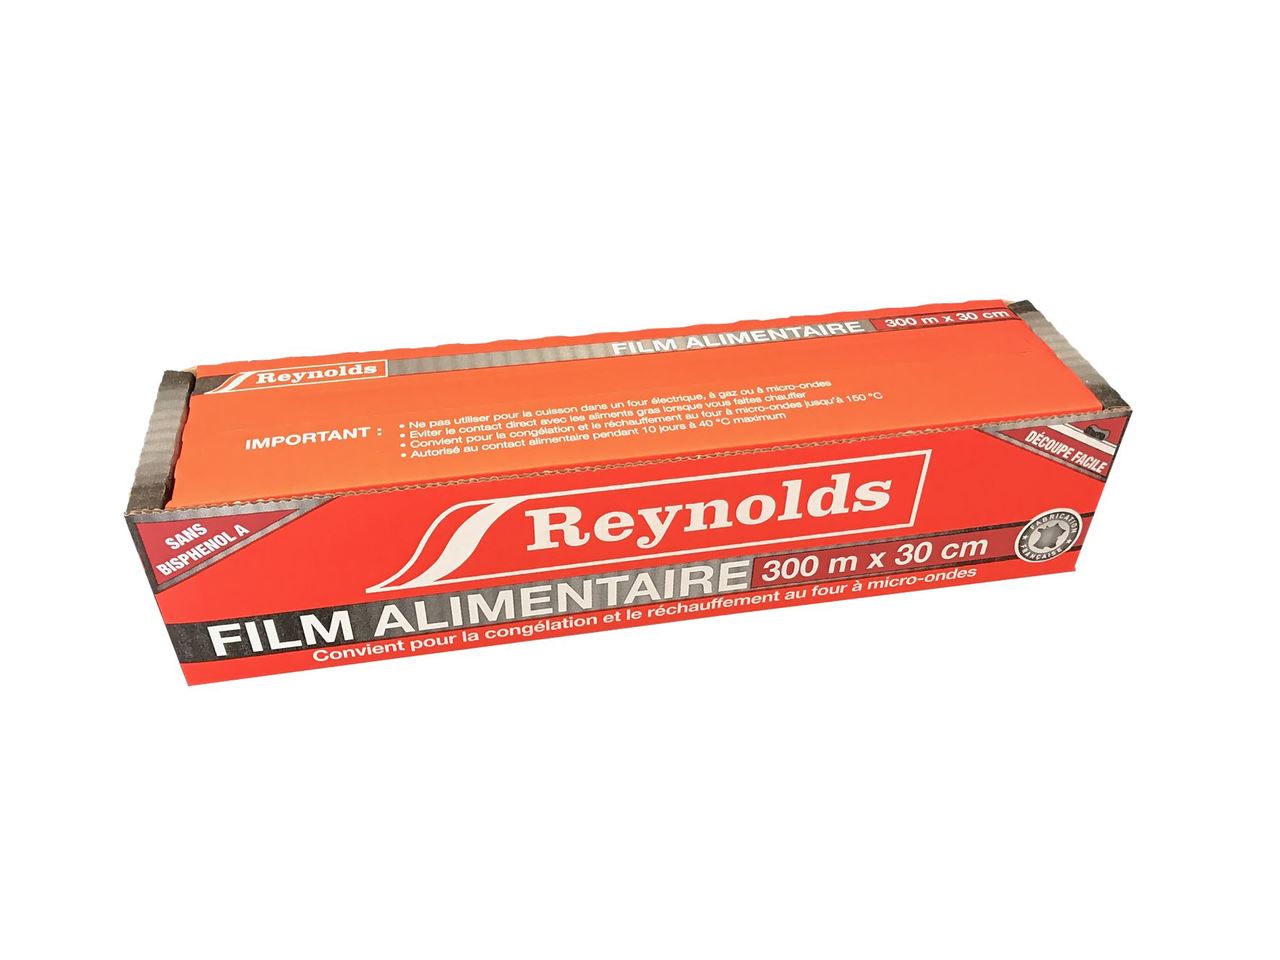 Film alimentaire Reynolds 300 m x 30 cm